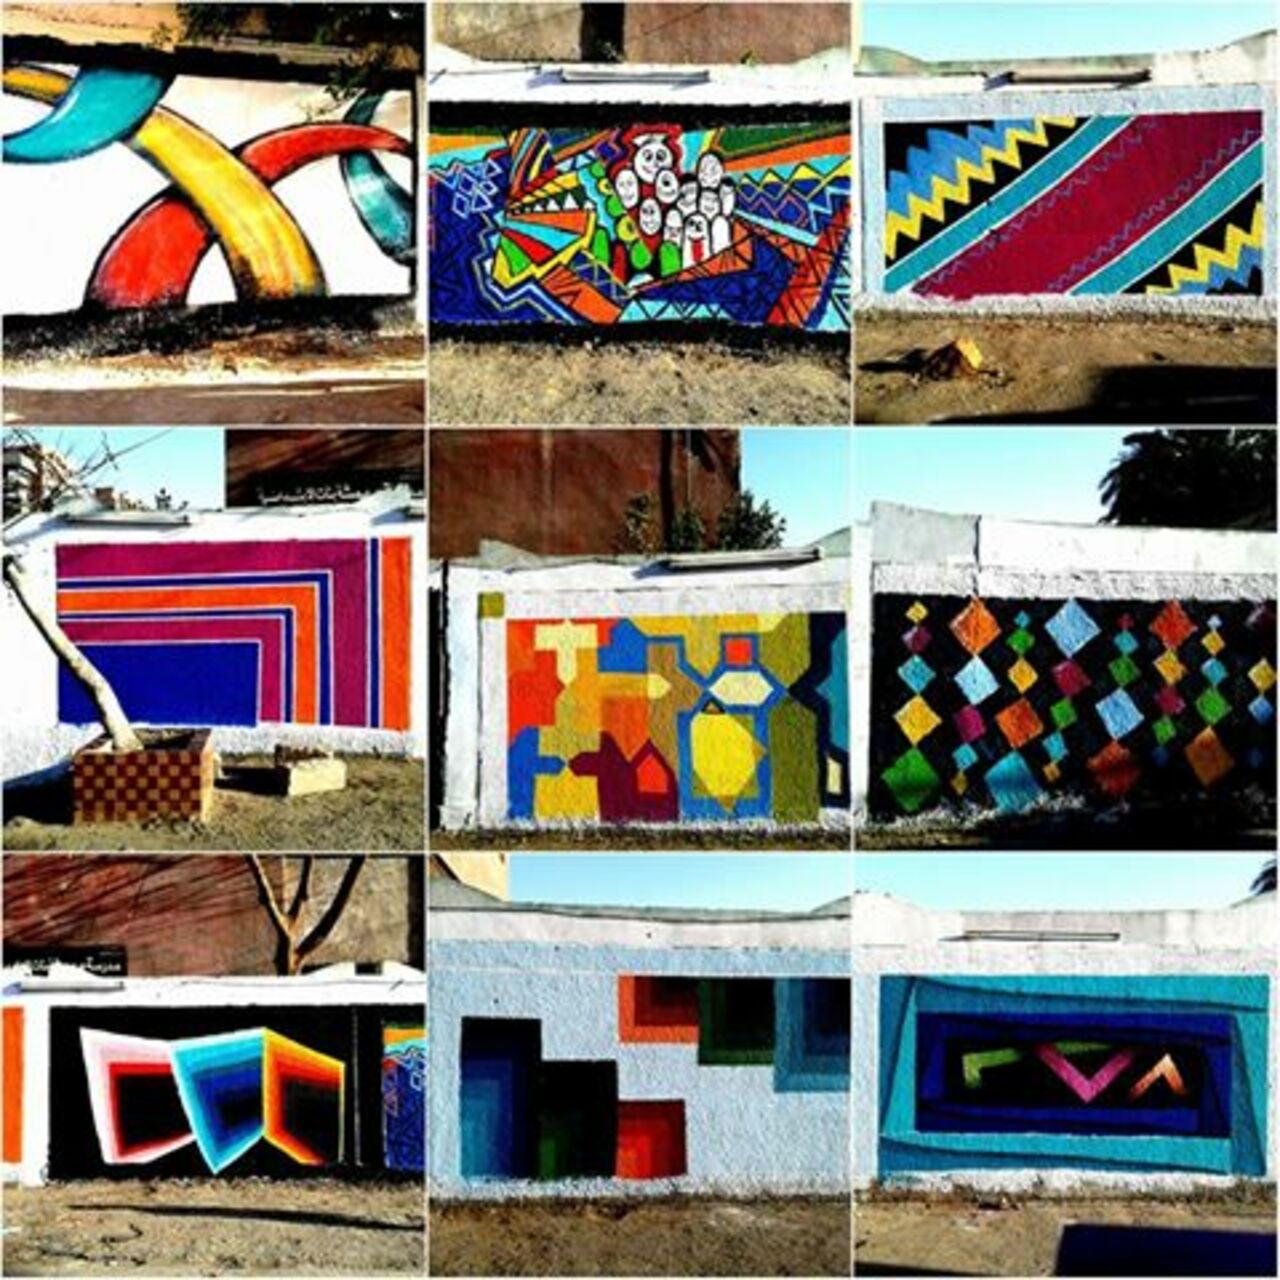 مدرسه المهمشه
#color #art #draw #street #cairo #egypt #graffiti #morning #sun #design #inspiration #happiness #smile http://t.co/BGWGuqItmH